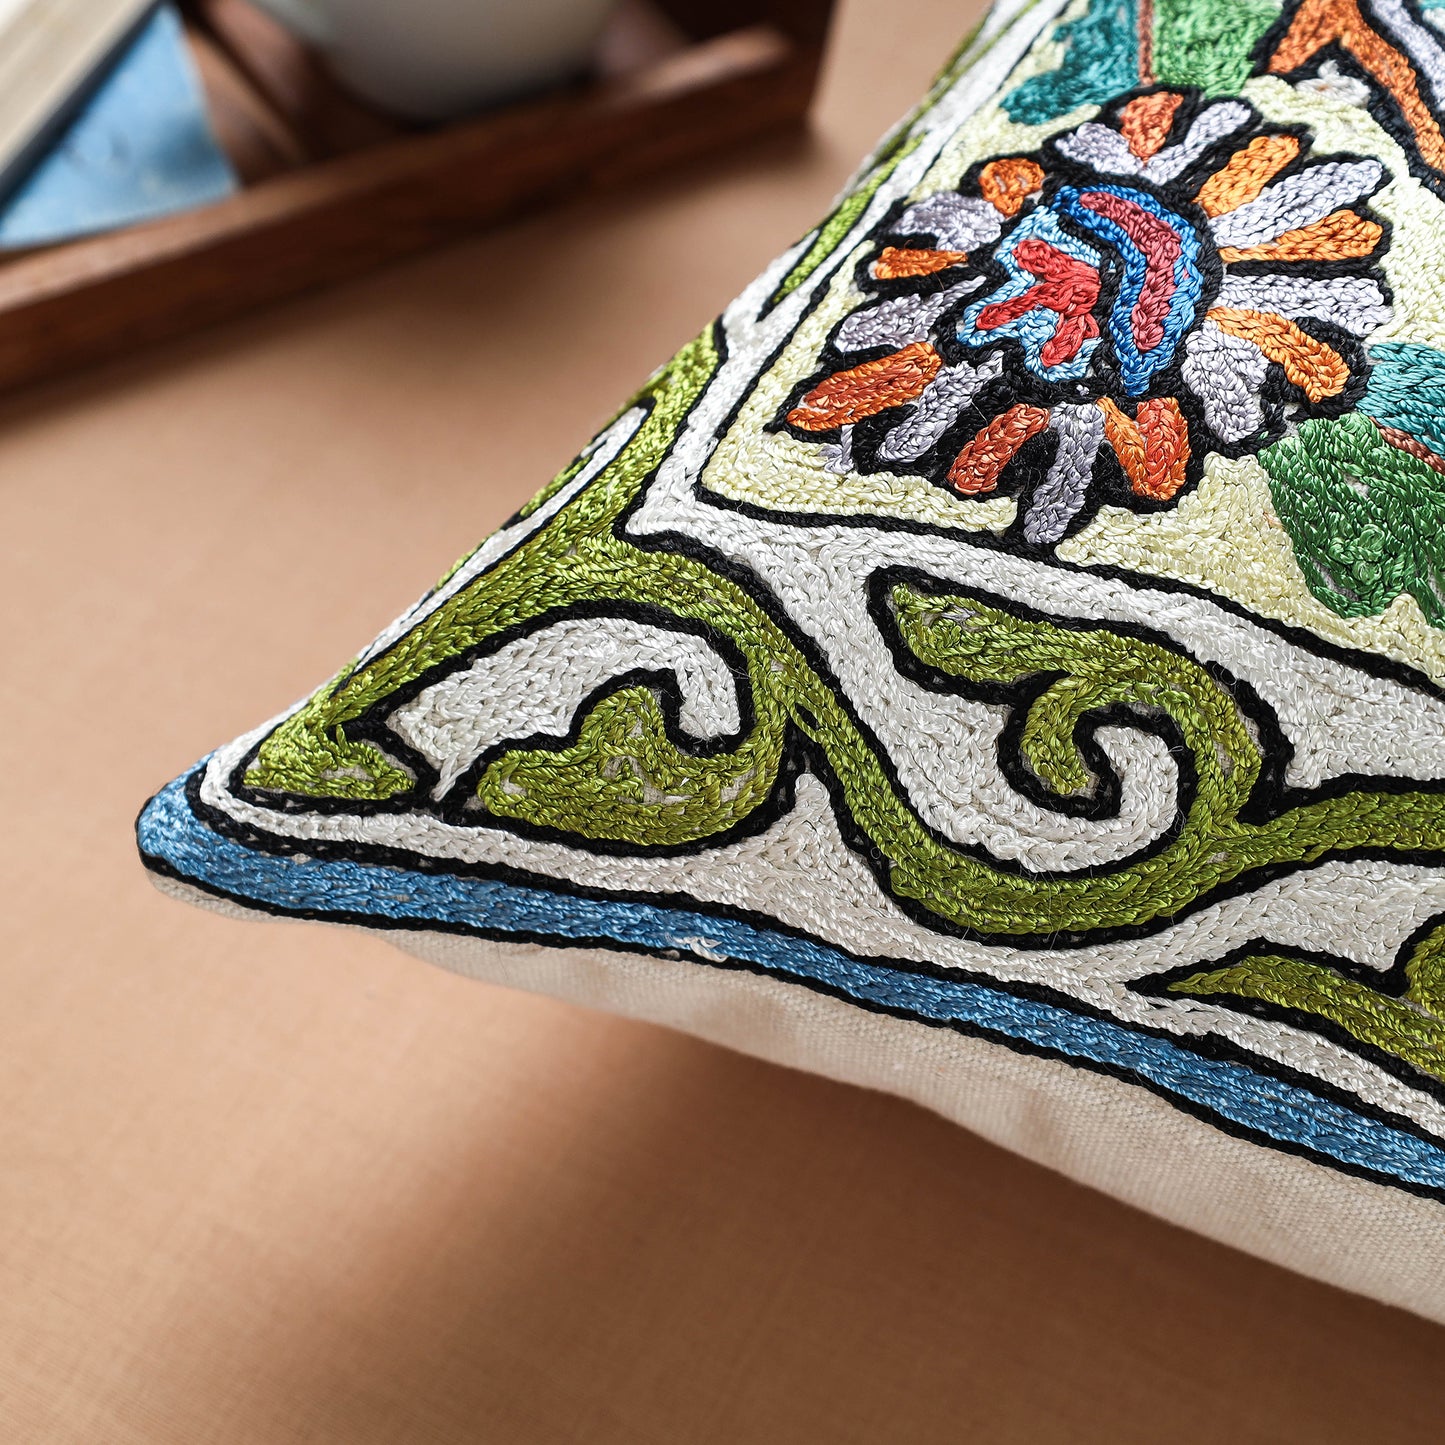 Green - Original Chain Stitch Crewel Thread Hand Embroidery Silk Cushion Cover (16 x 16 in)